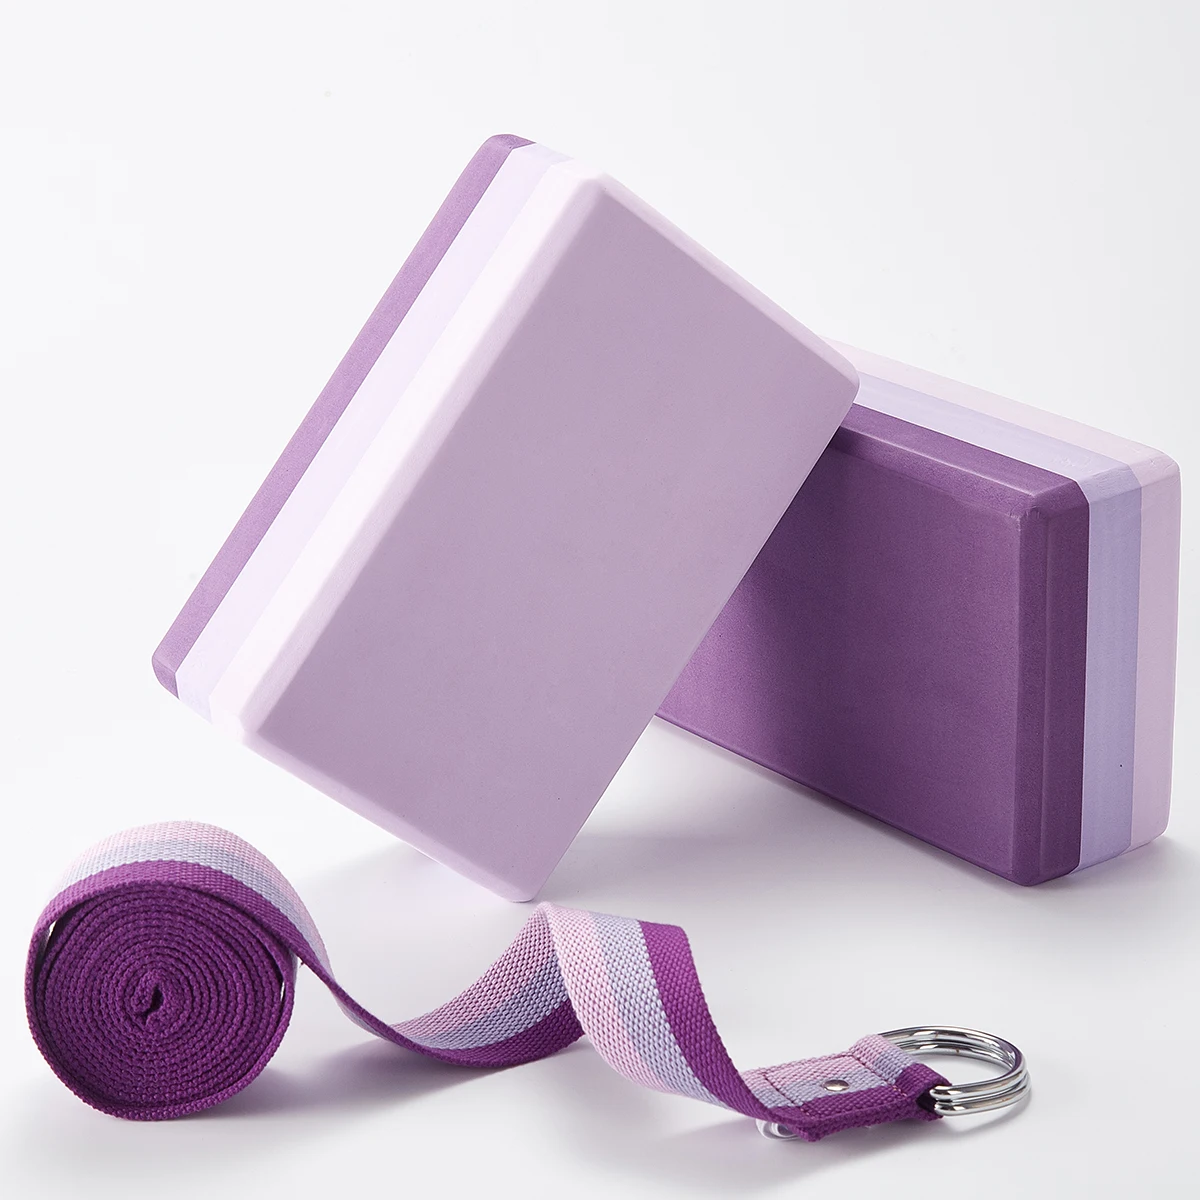 Mowin Custom Eco Friendly Eva Foam Yoga Block - Buy Yoga Block And ...